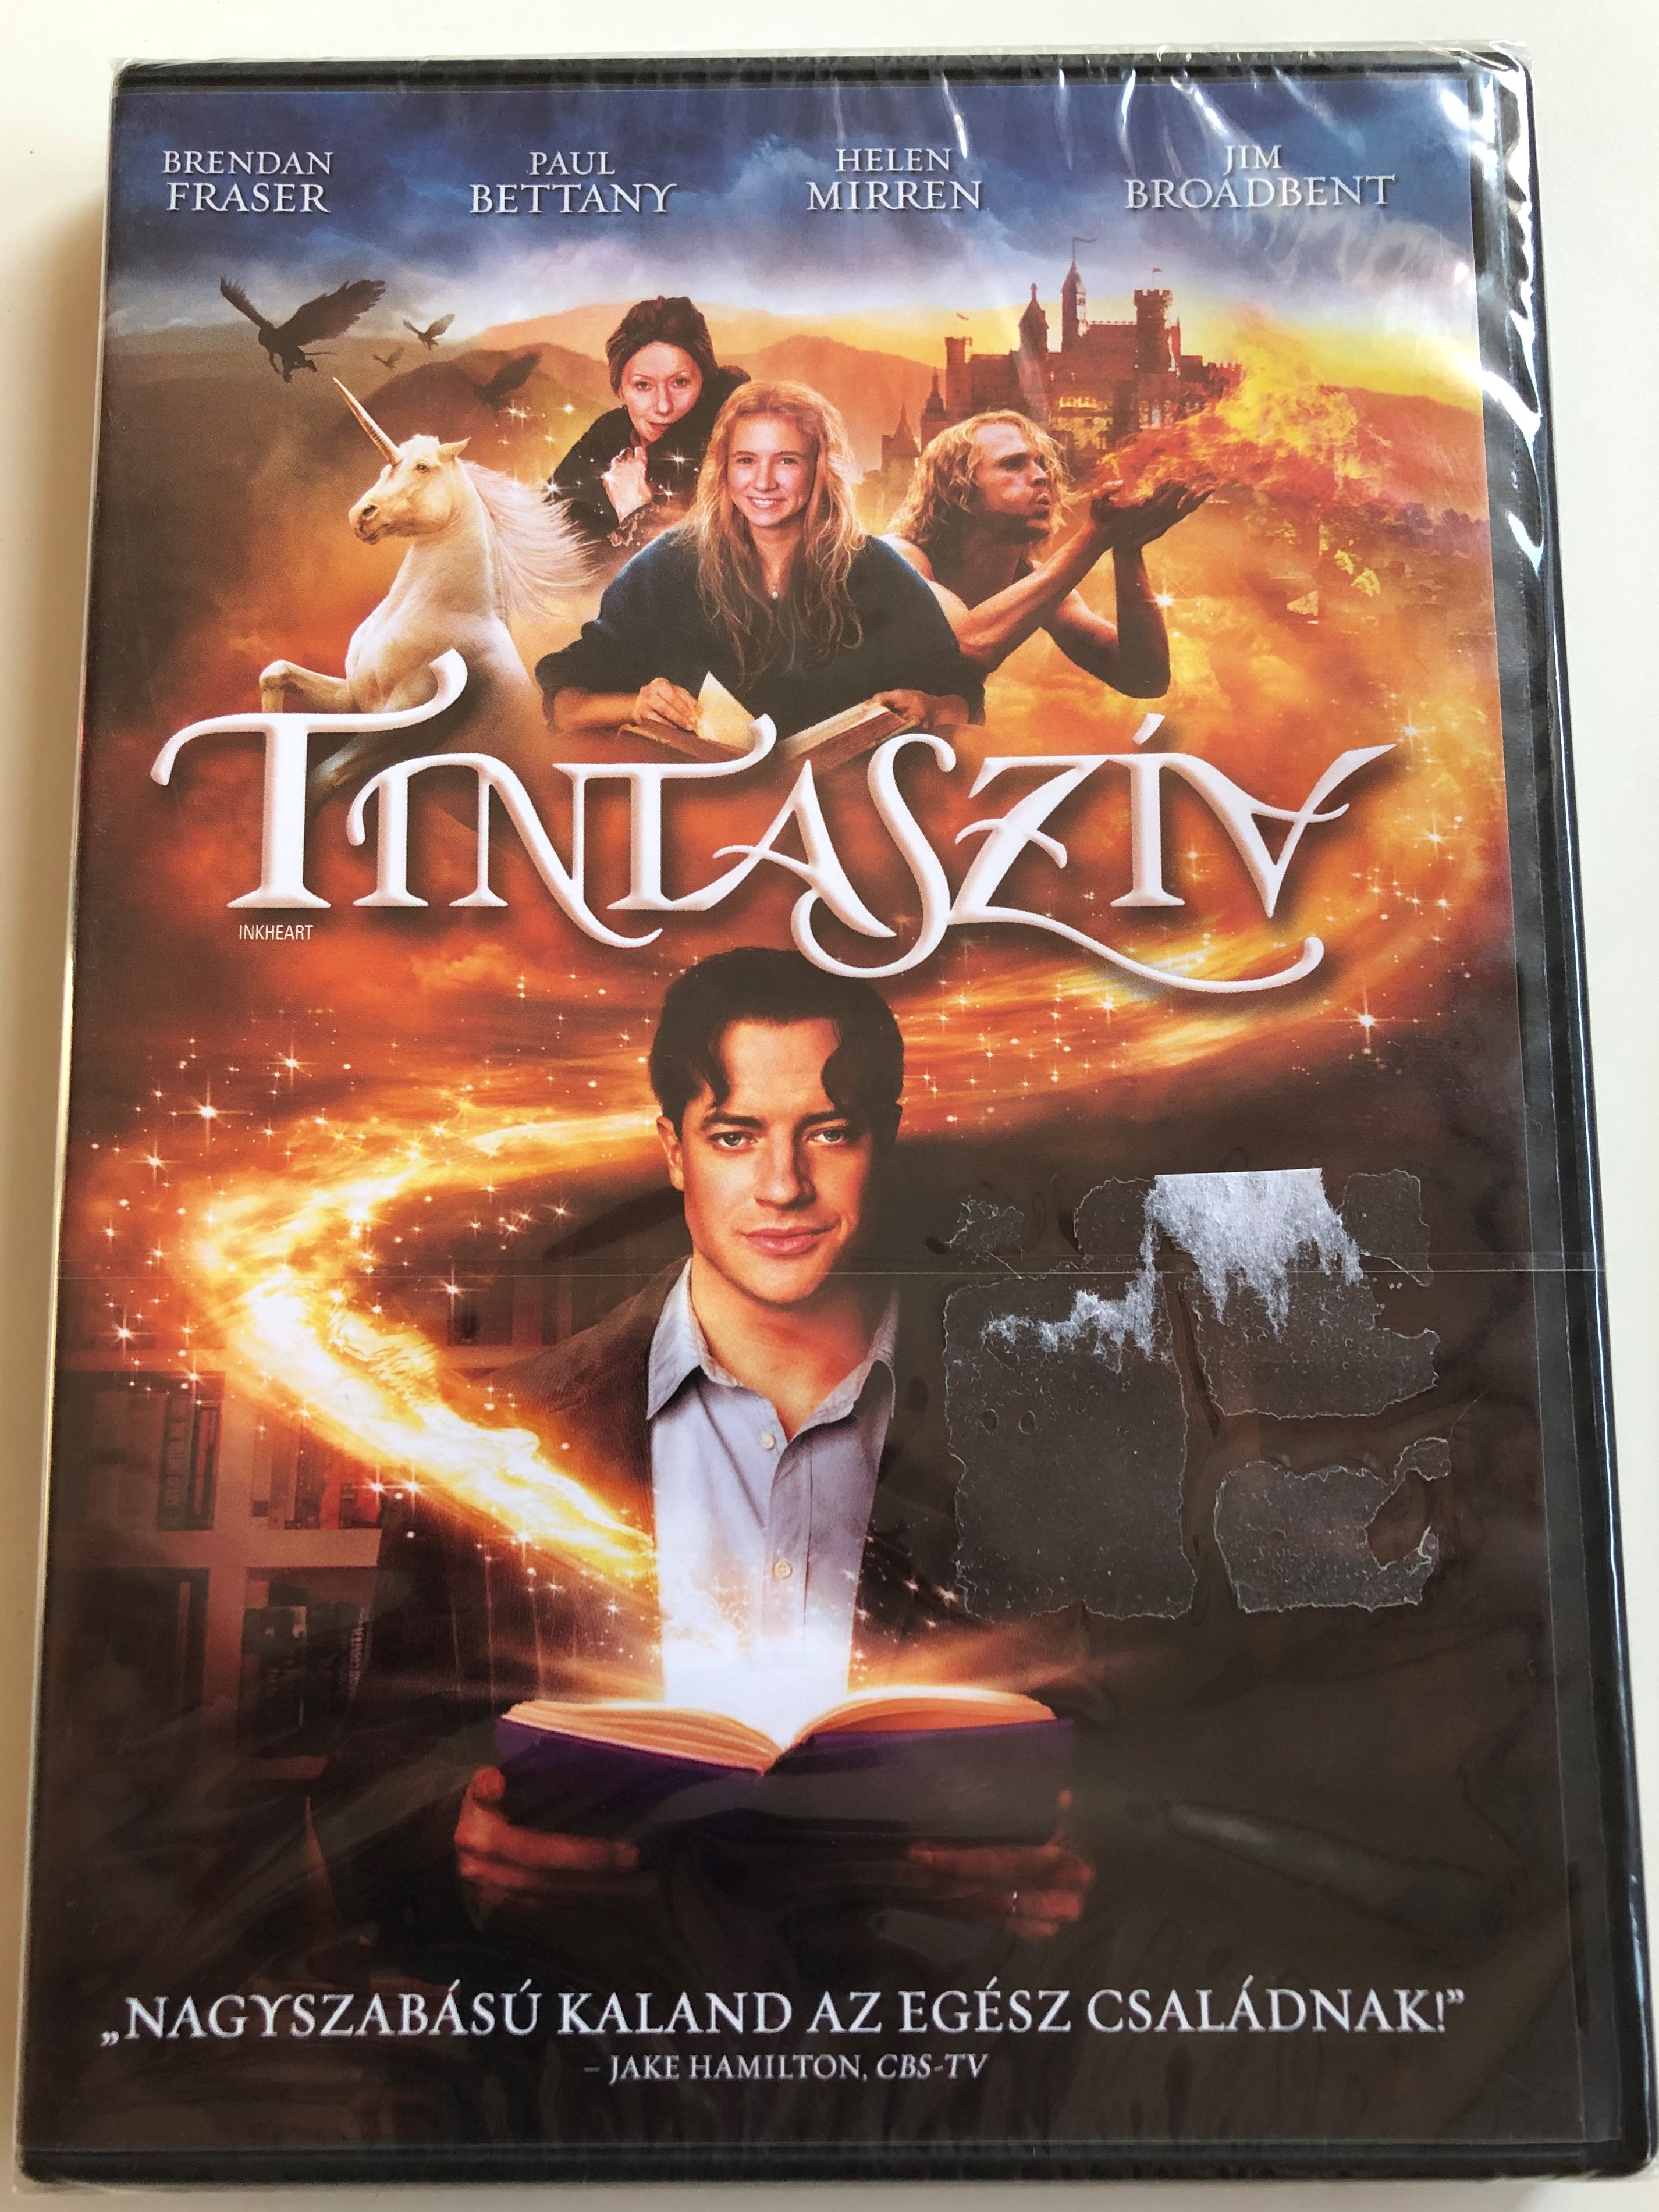 Inkheart DVD 2009 Tintaszív / Directed by Iain Softley / Starring: Brendan  Fraser, Paul Bettany, Helen Mirren, Jim Broadbent - bibleinmylanguage